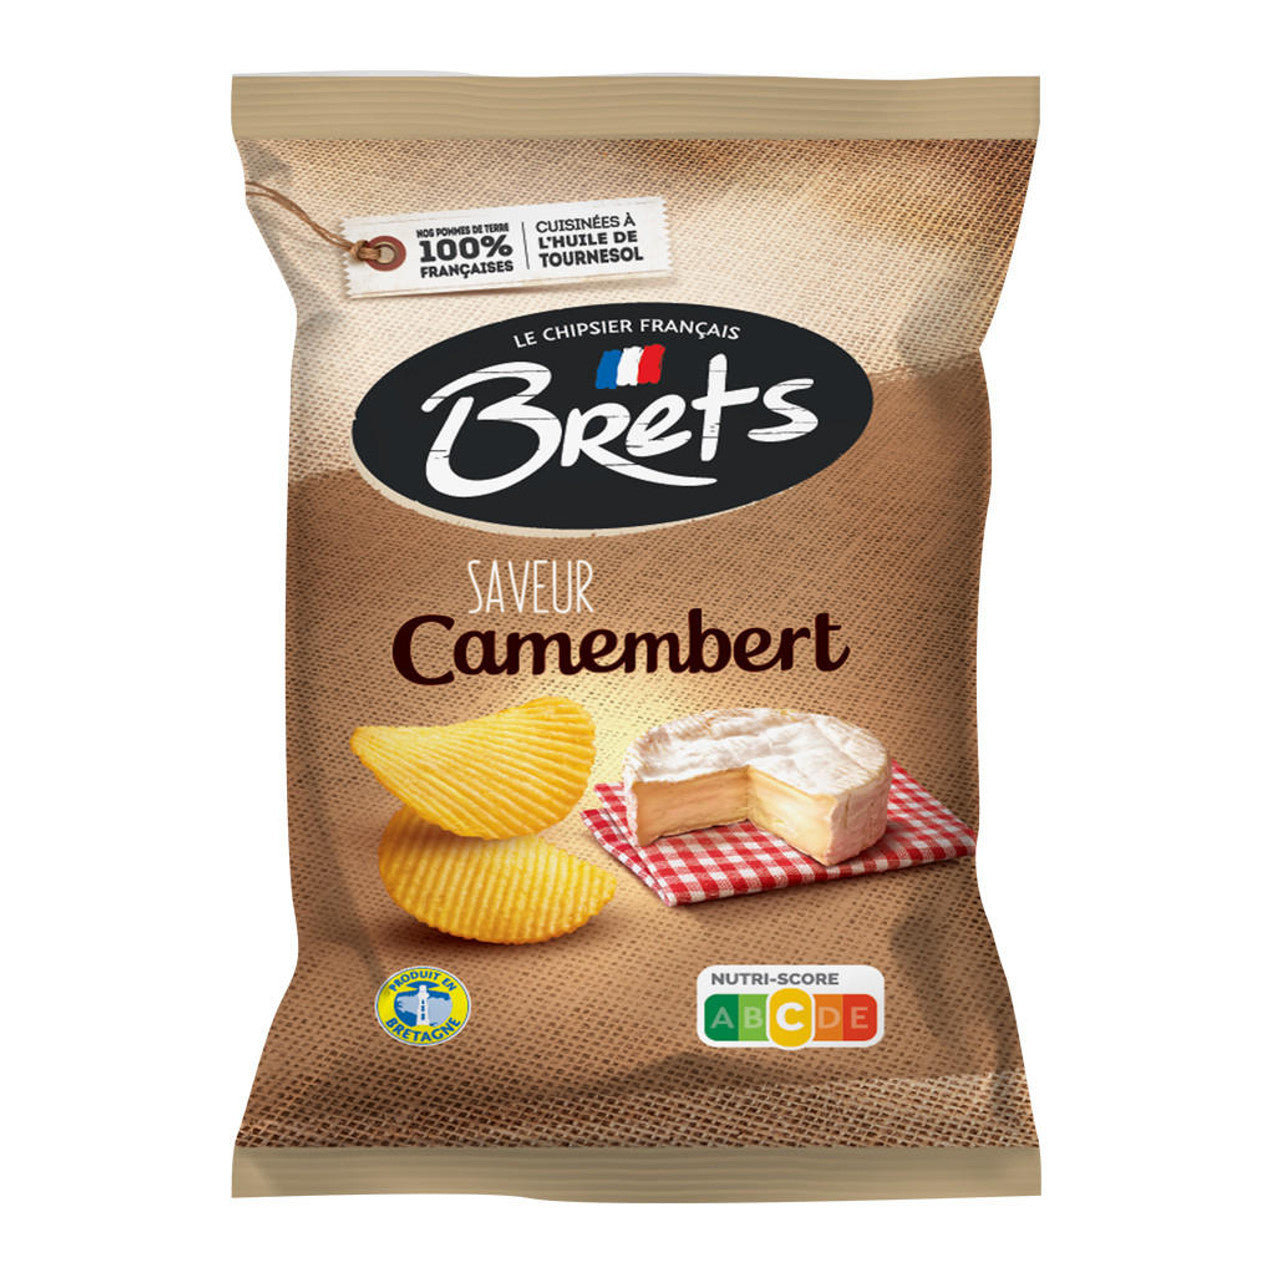 Brets Chips, Camembert (France)